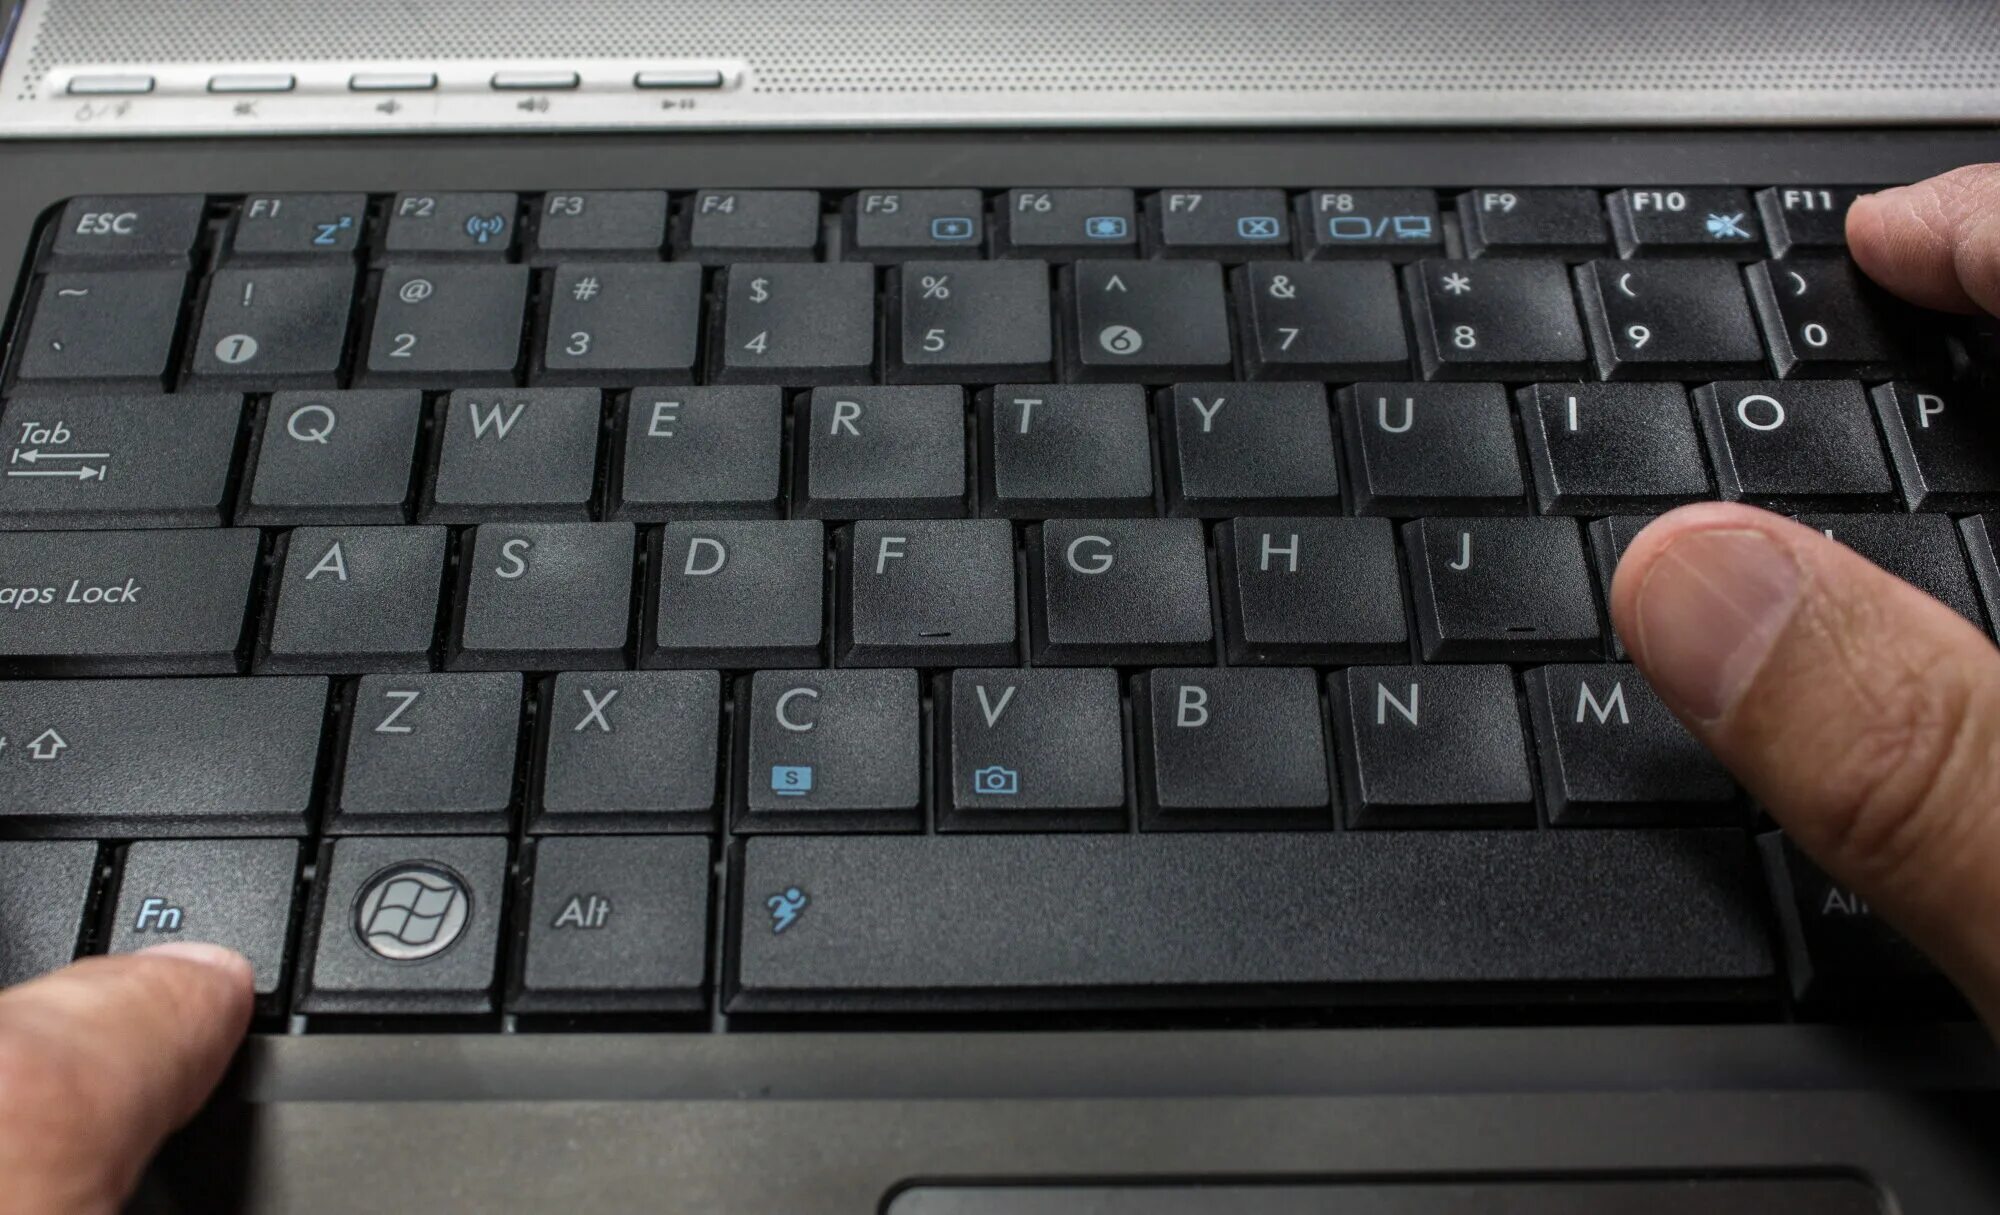 FN+Numlock на ноутбуке. Клавиша Numlock на ноутбуке. Клавиша Numlock на клавиатуре.